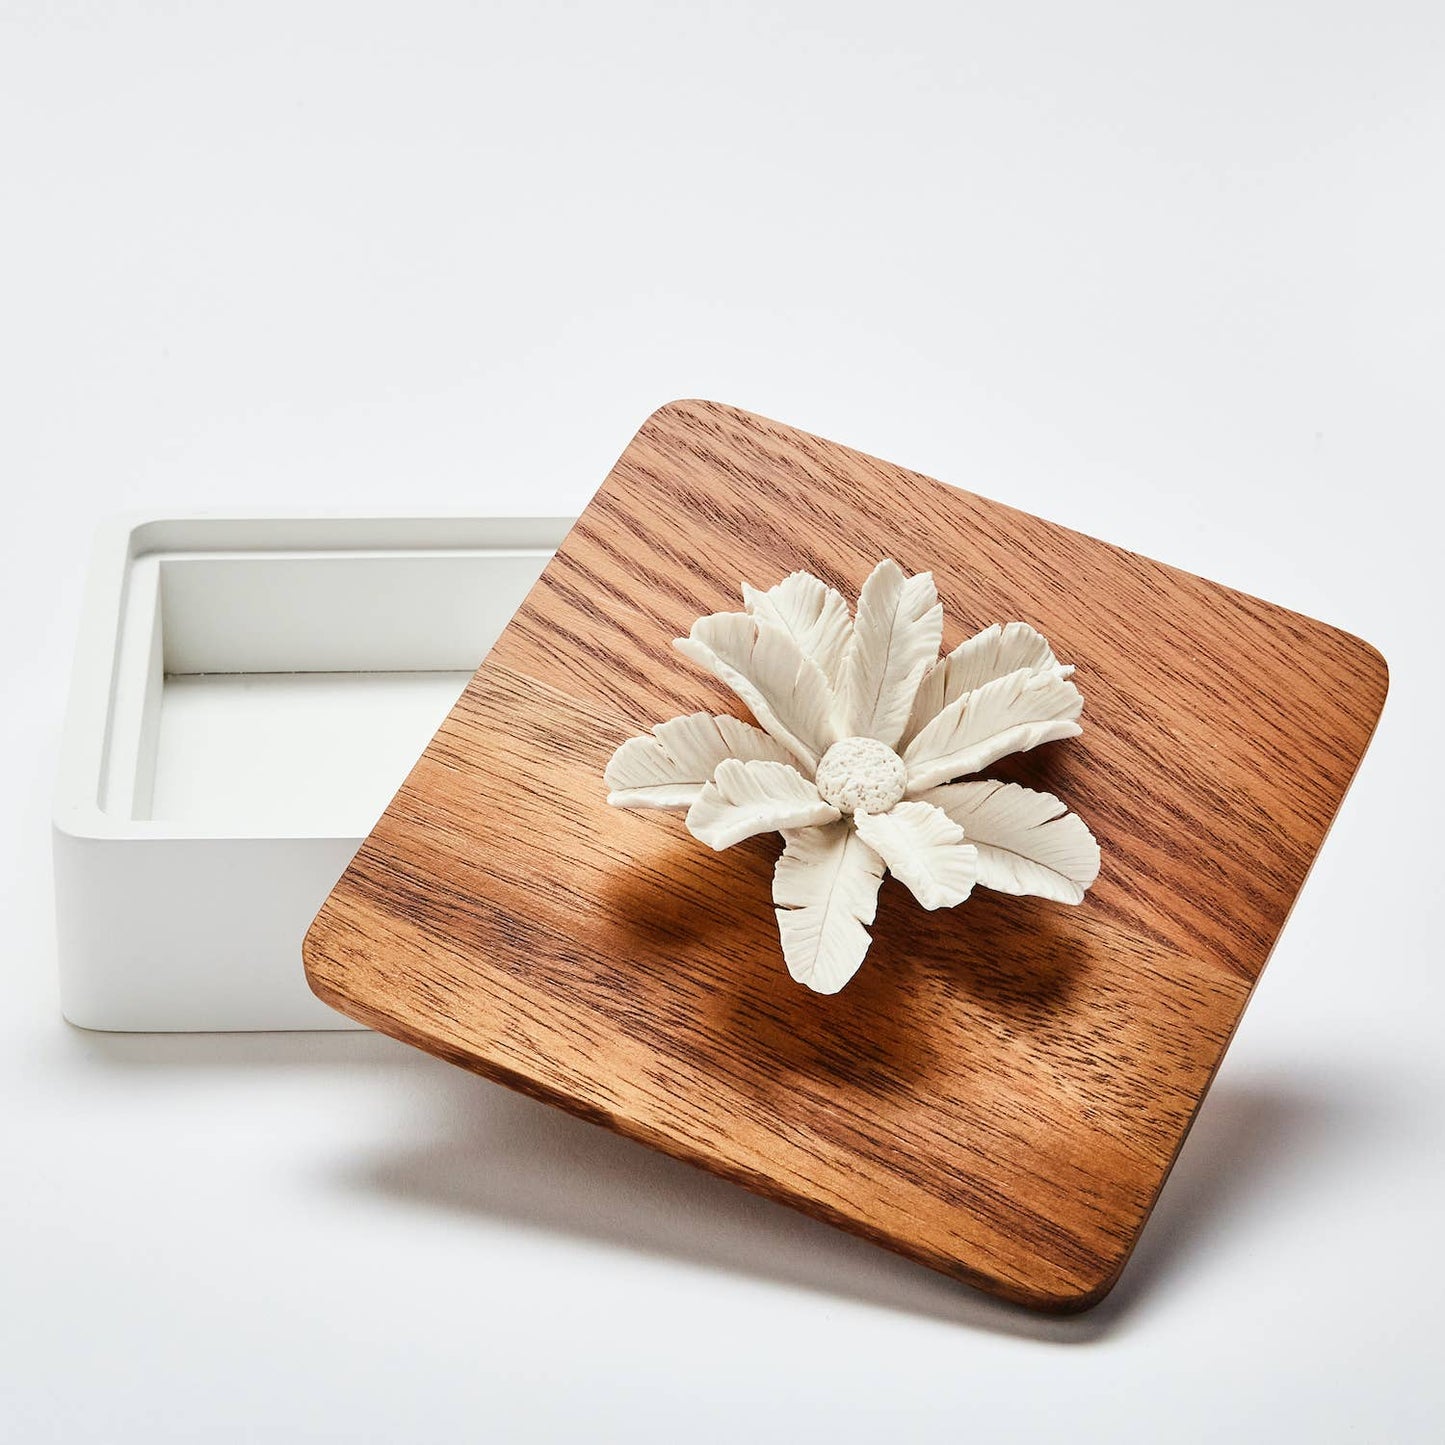 LUXOR Wood + Porcelain Diffuser Box